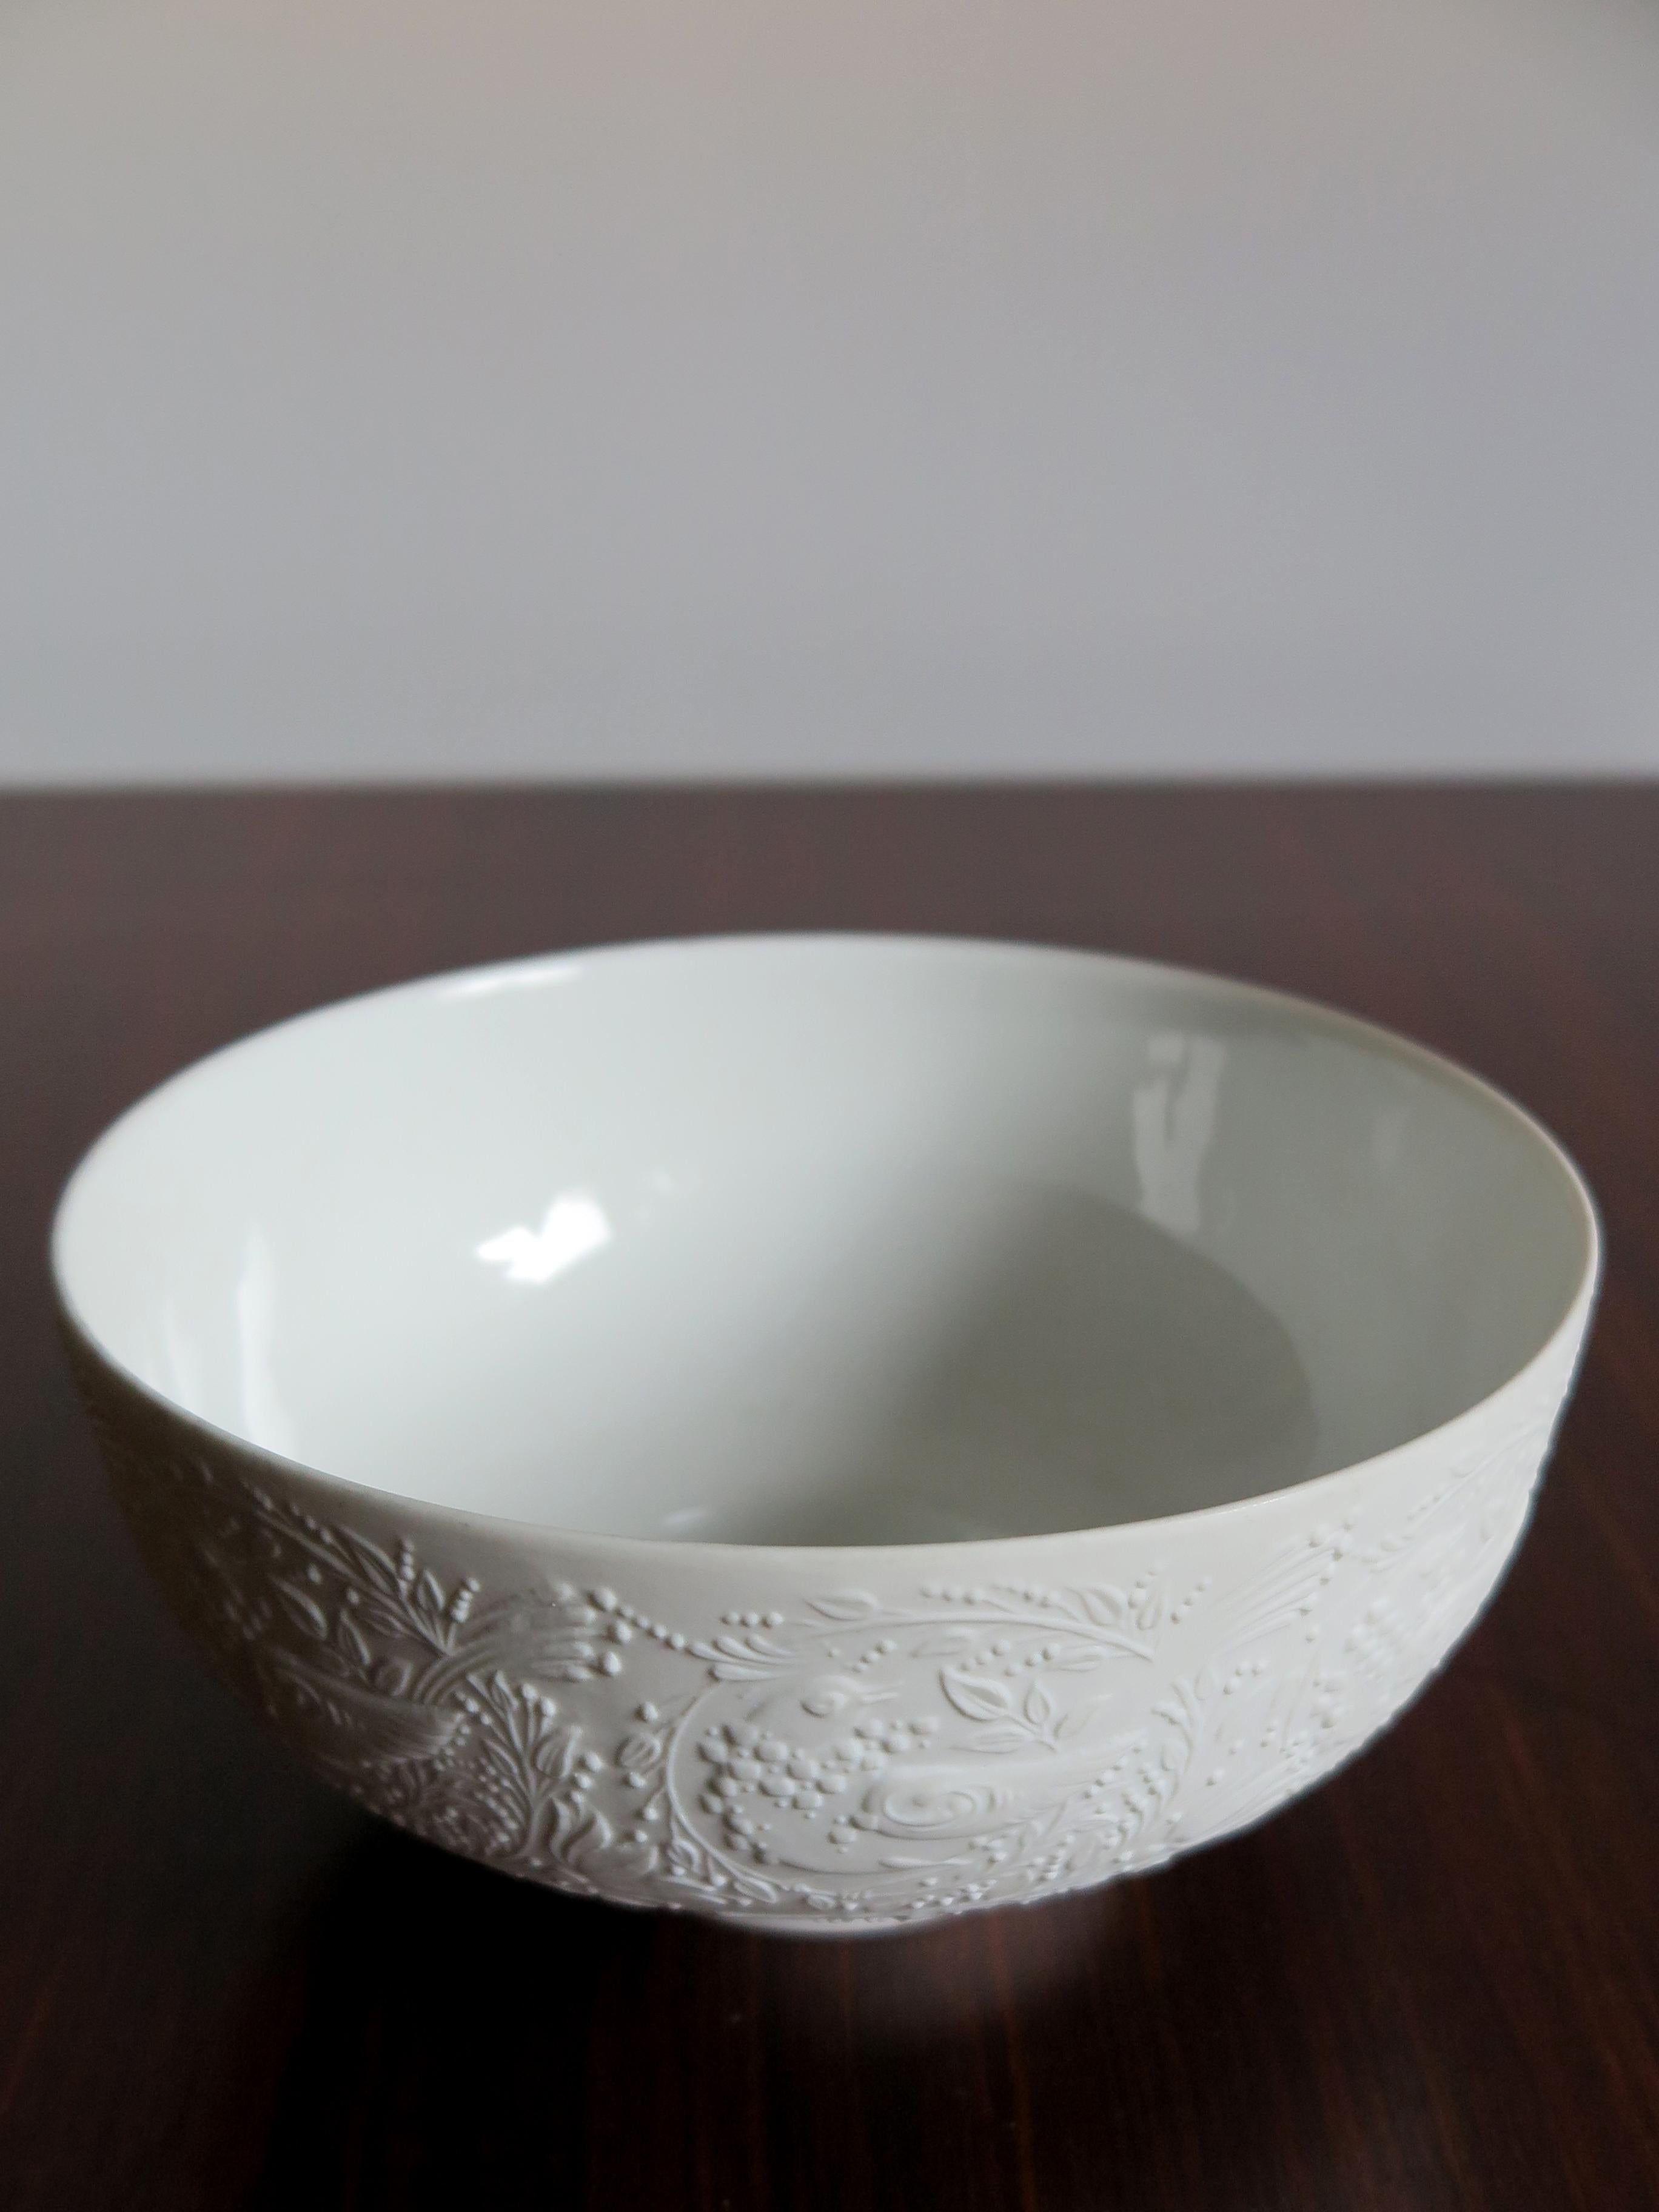 Original Rosenthal Germany Studio Linie white porcelain bowl,
designed by Danish artist Björn Wiinblad, circa 1970.
Signature of manufacturer and designer under the base.